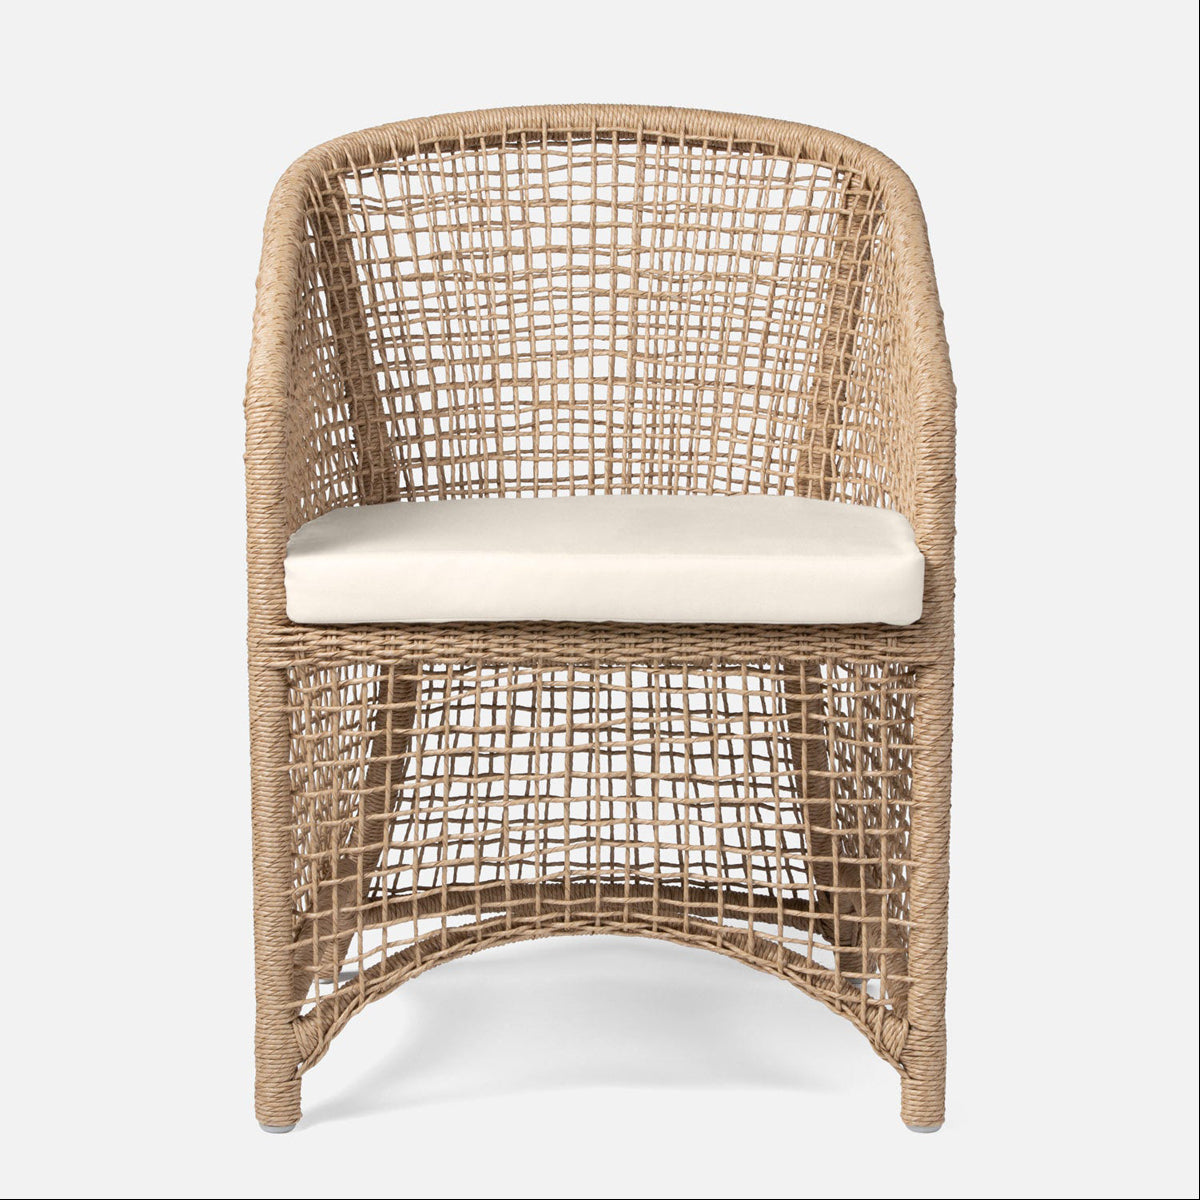 Made Goods Helena Open-Weave Barrel Outdoor Dining Chair in Garonne